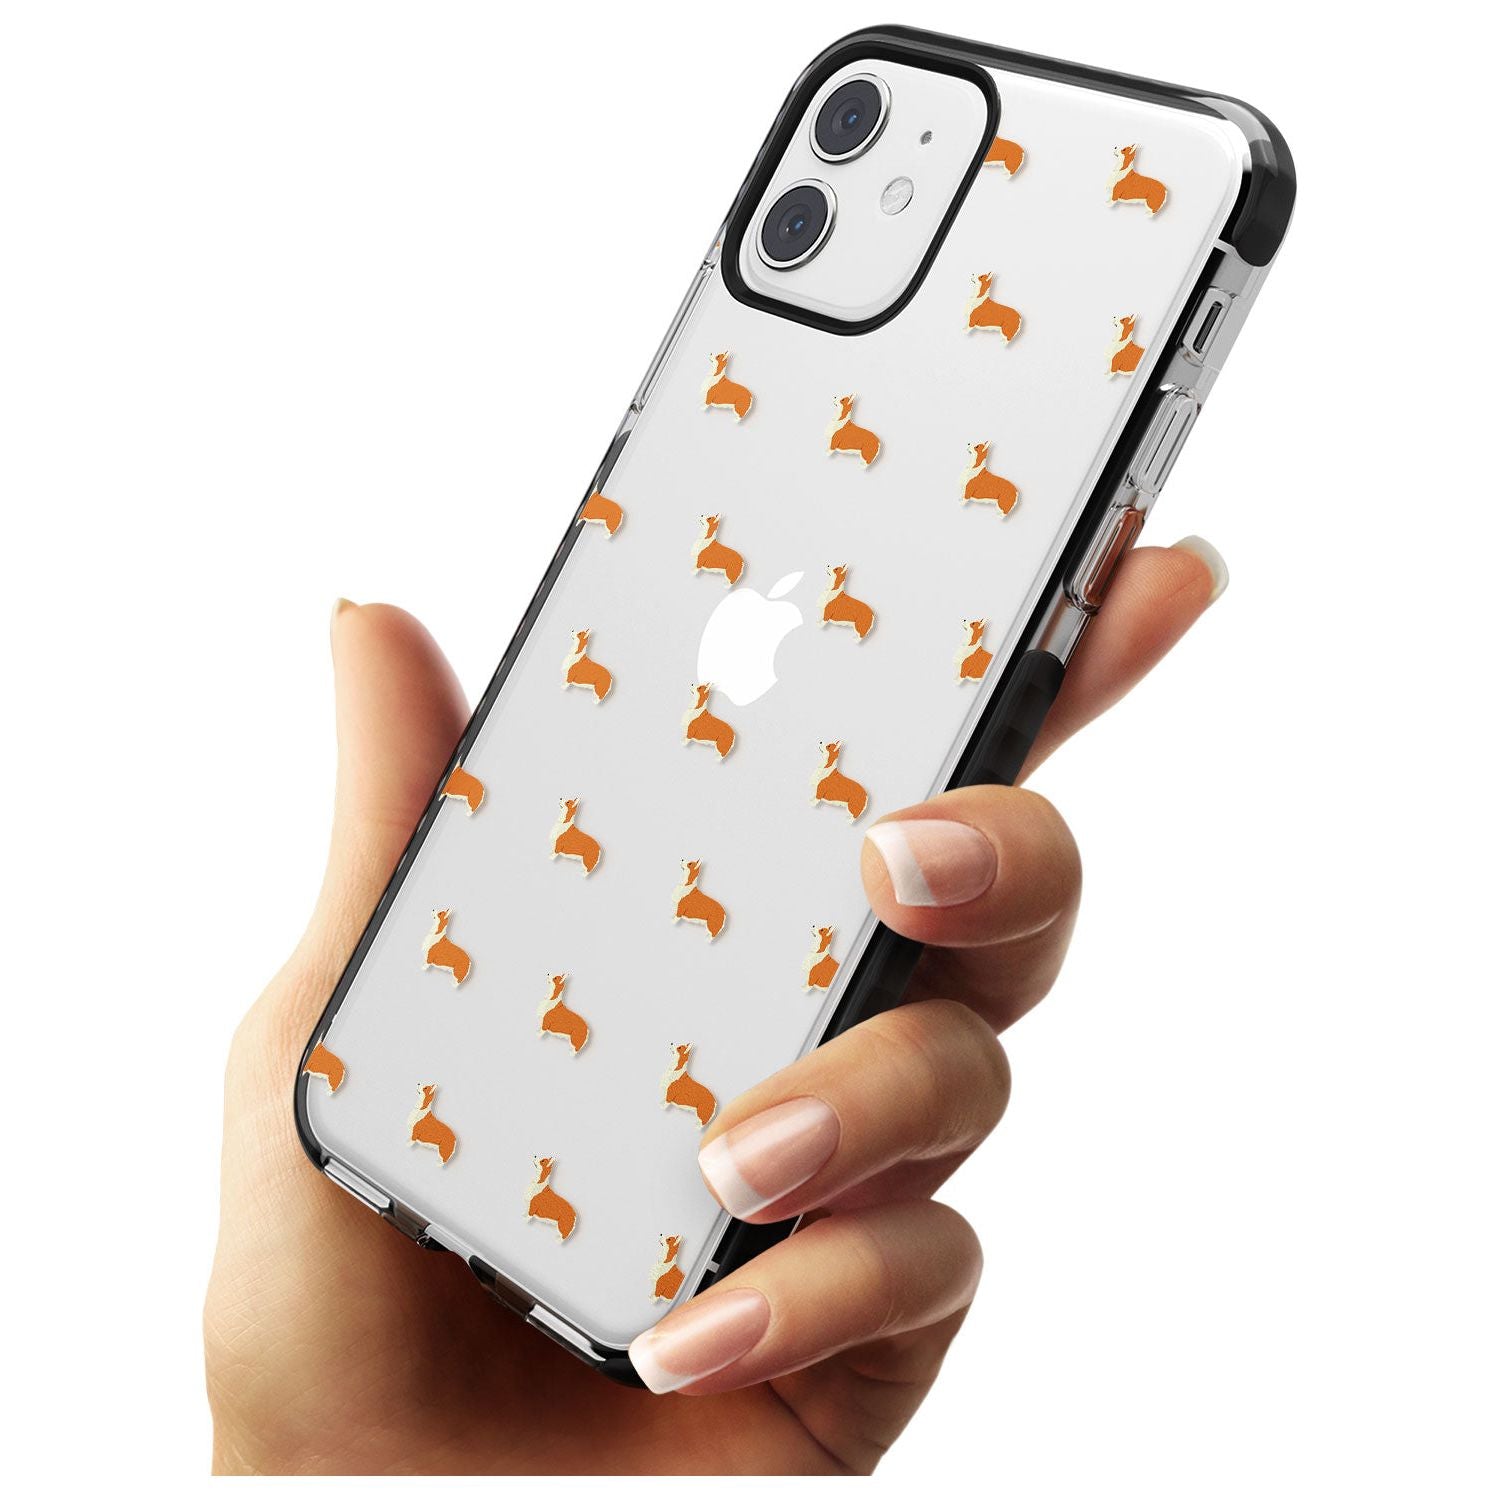 Pembroke Welsh Corgi Dog Pattern Clear Black Impact Phone Case for iPhone 11